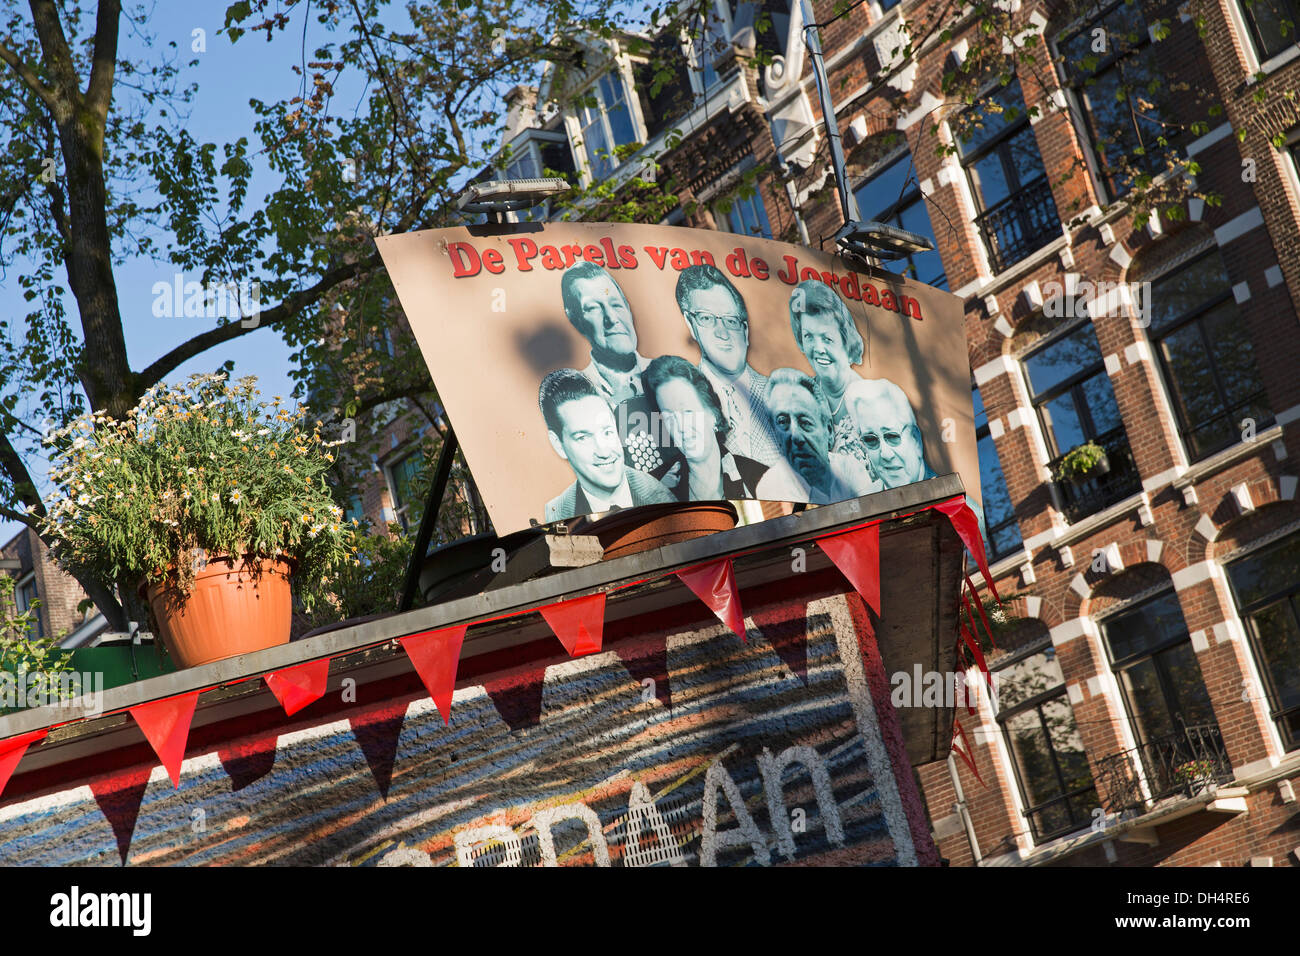 Paesi Bassi, Amsterdam, piazza chiamata Johnny Jordaan Plein con immagine di cantanti famosi dal quartiere Jordaan Foto Stock